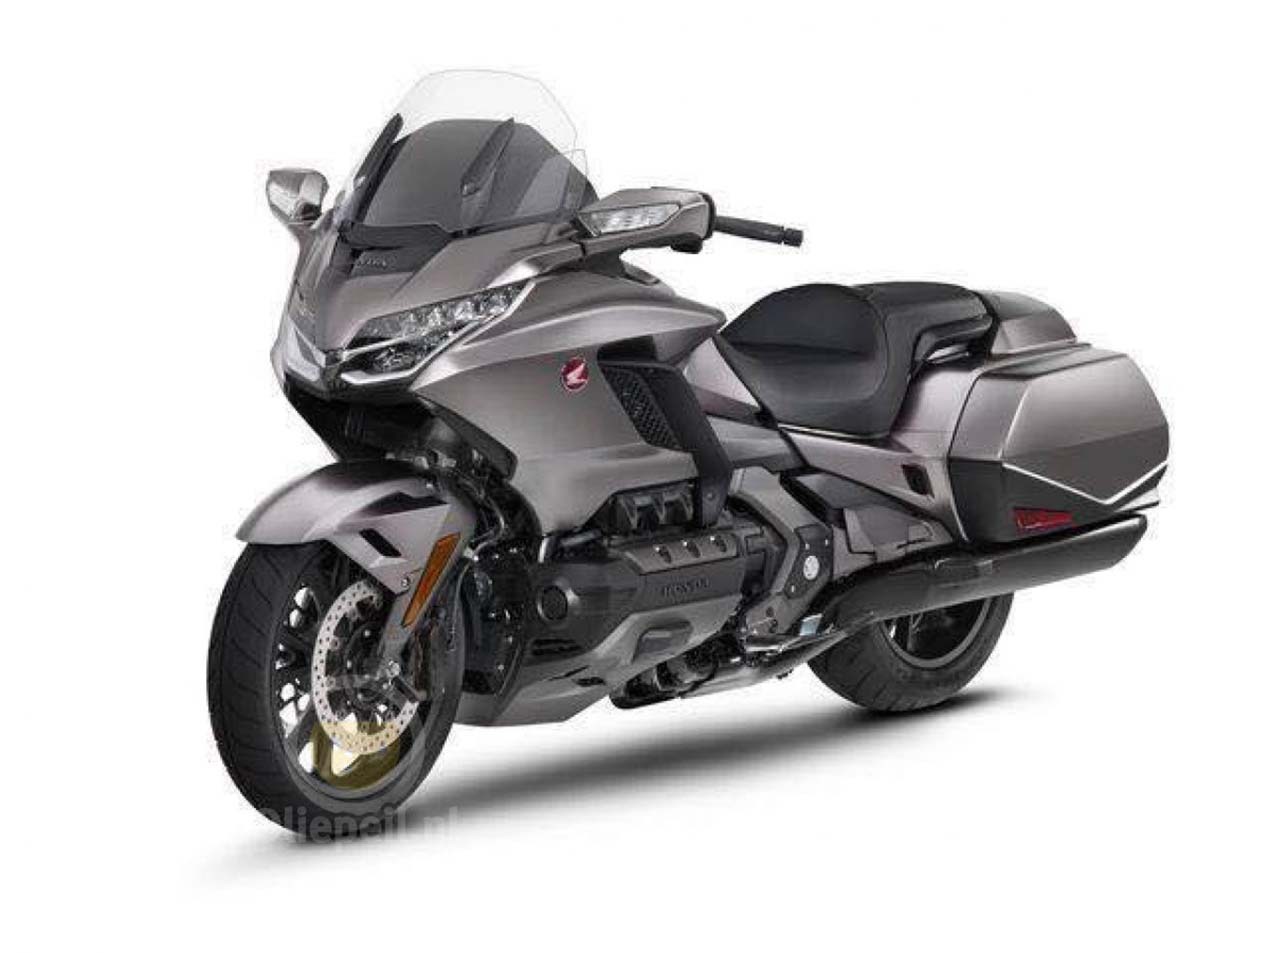 2018-honda-f6b-bagger-specs-motorcycles-bikes-1800.jpg